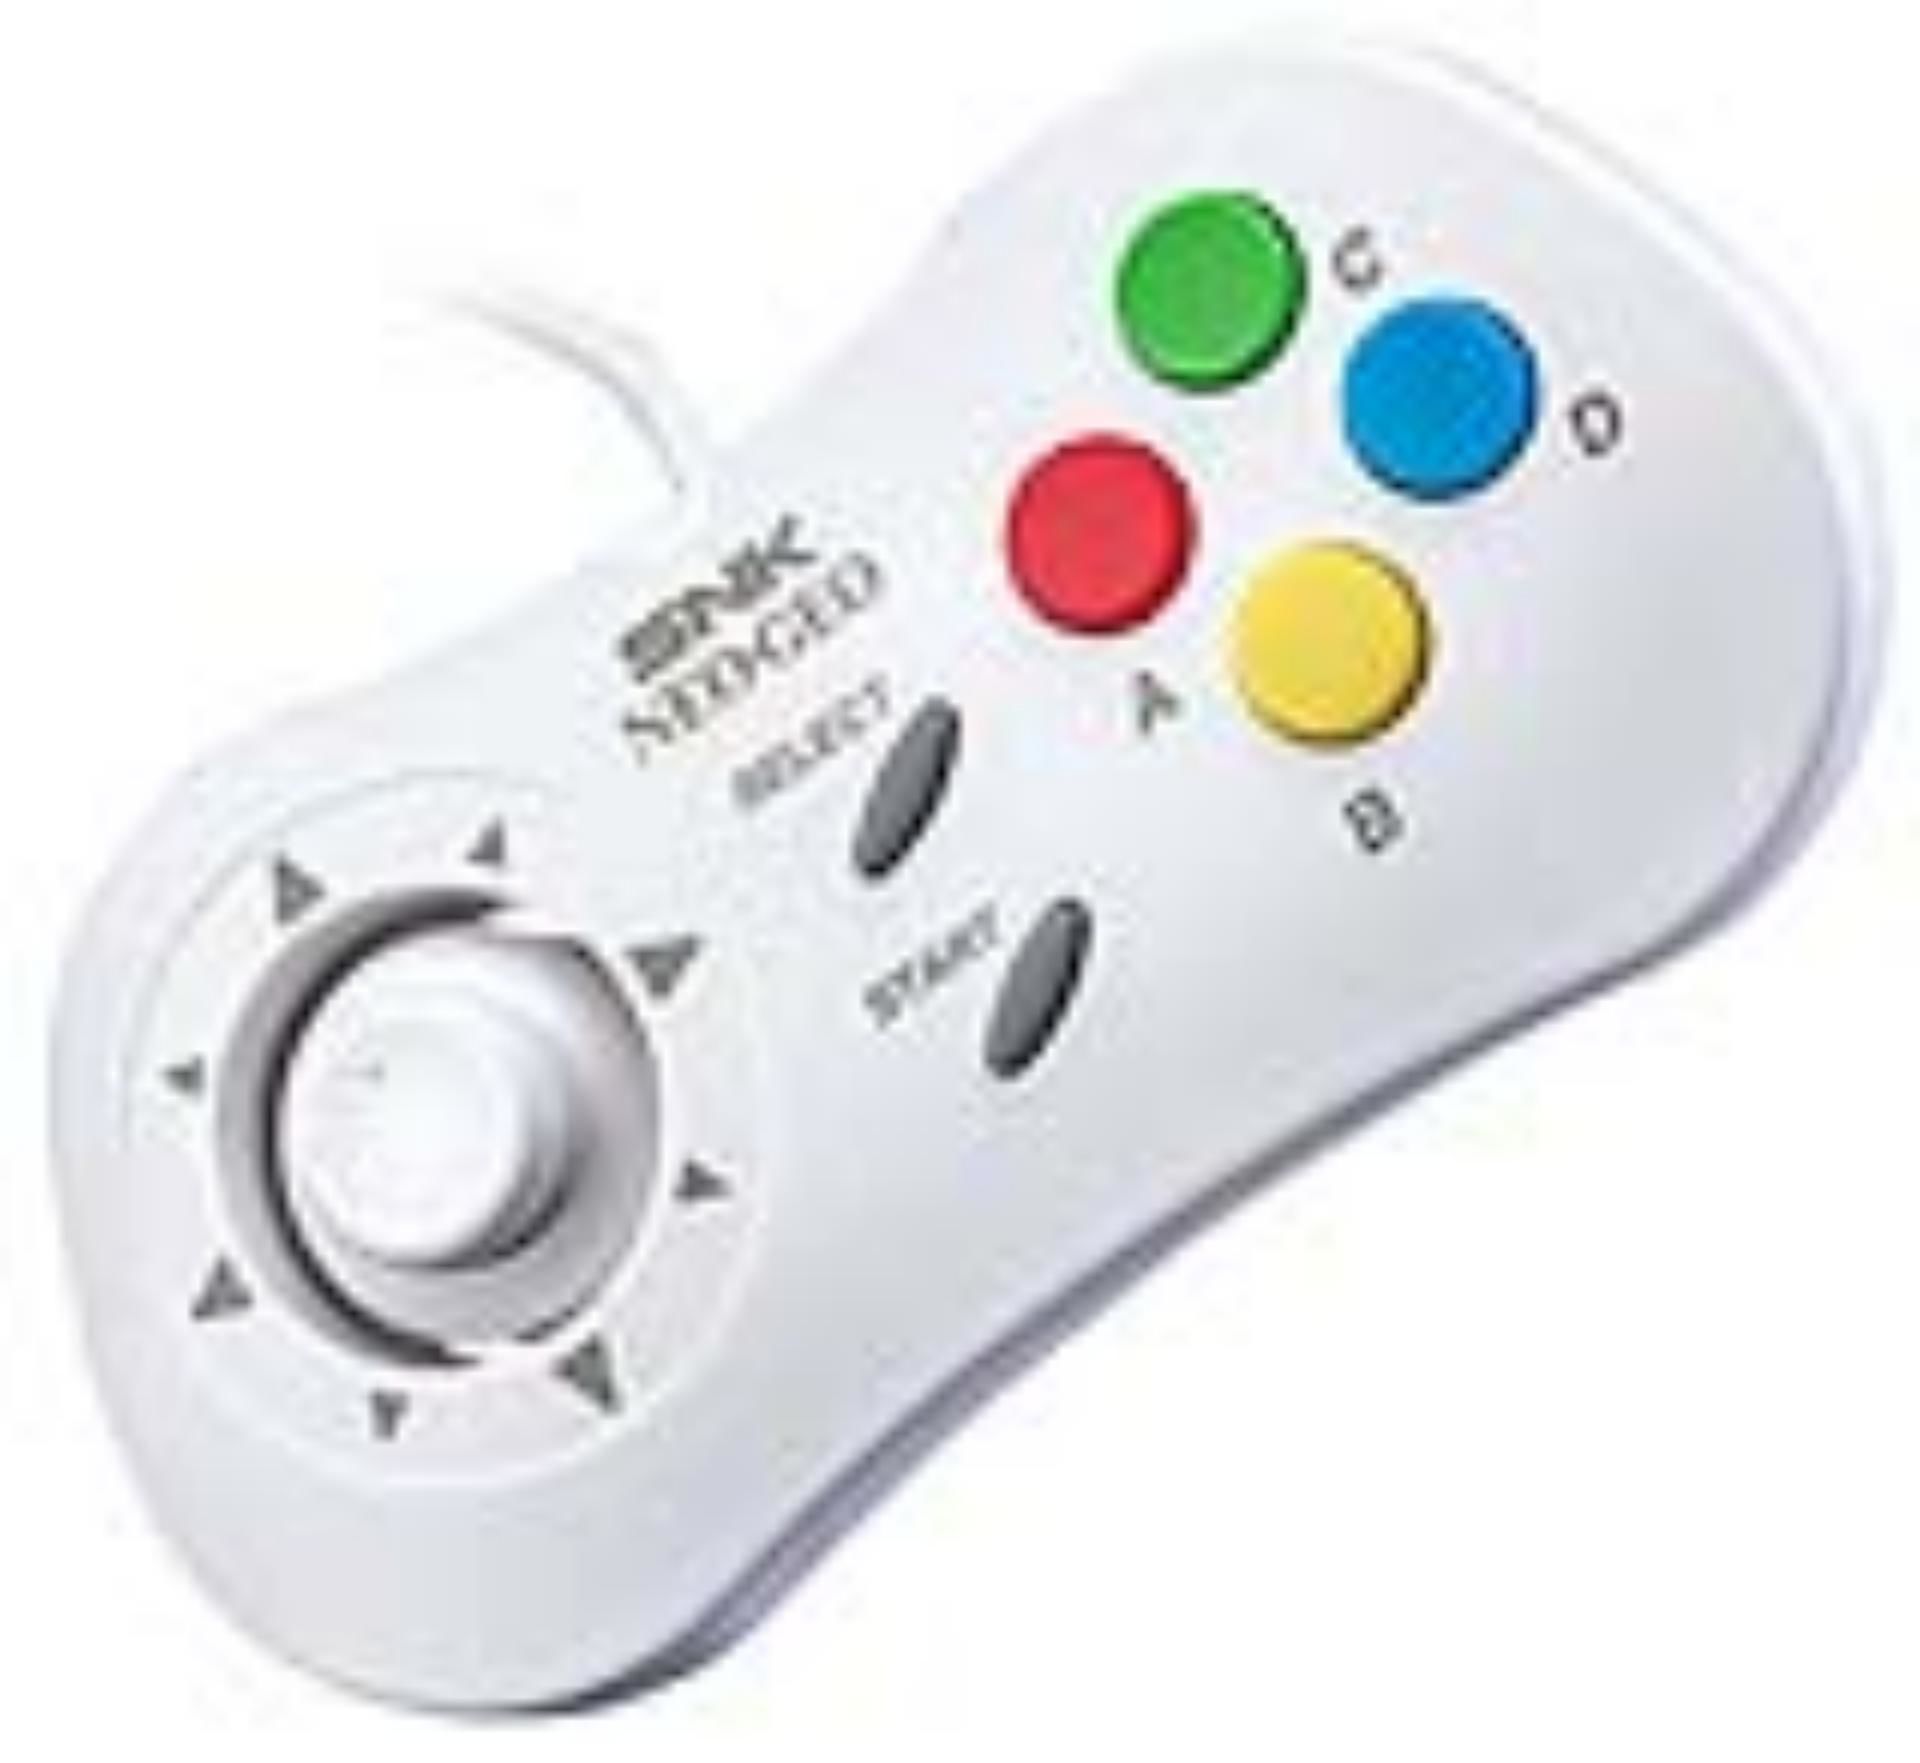 SNK Neo Geo Mini Official Control Pad White